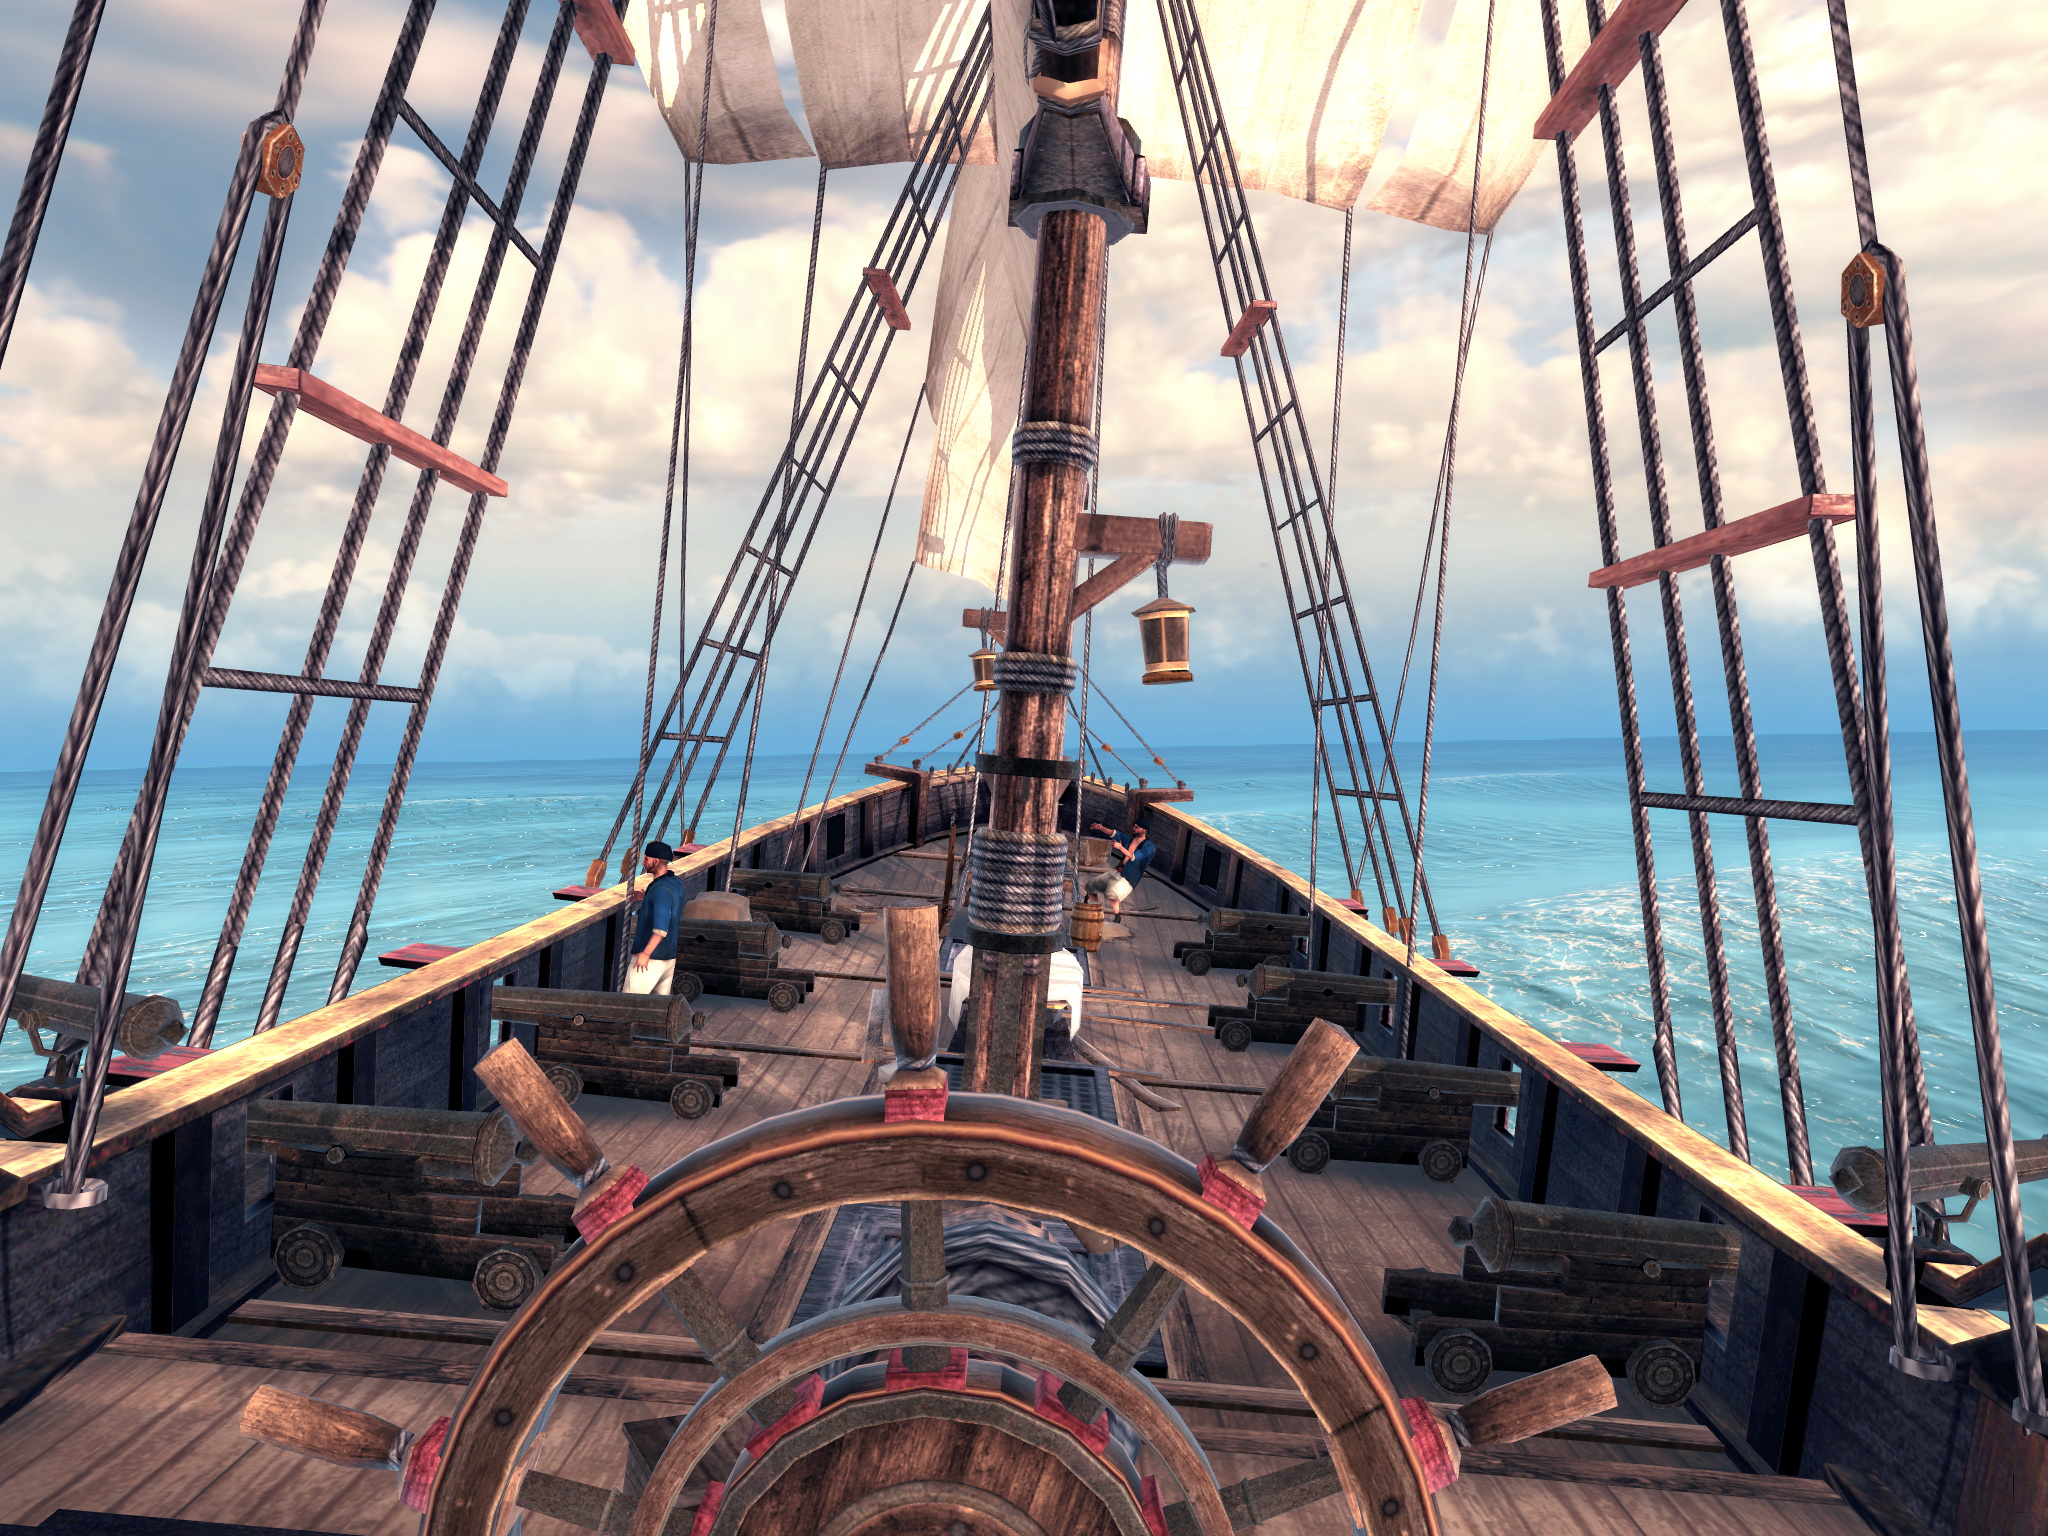 On board the ship. Ассасин Крид Пиратес. Assassins Creed Pirates корабли. Палуба корабля Assassins Creed. Фрегат пиратский Assassins Creed Pirates.